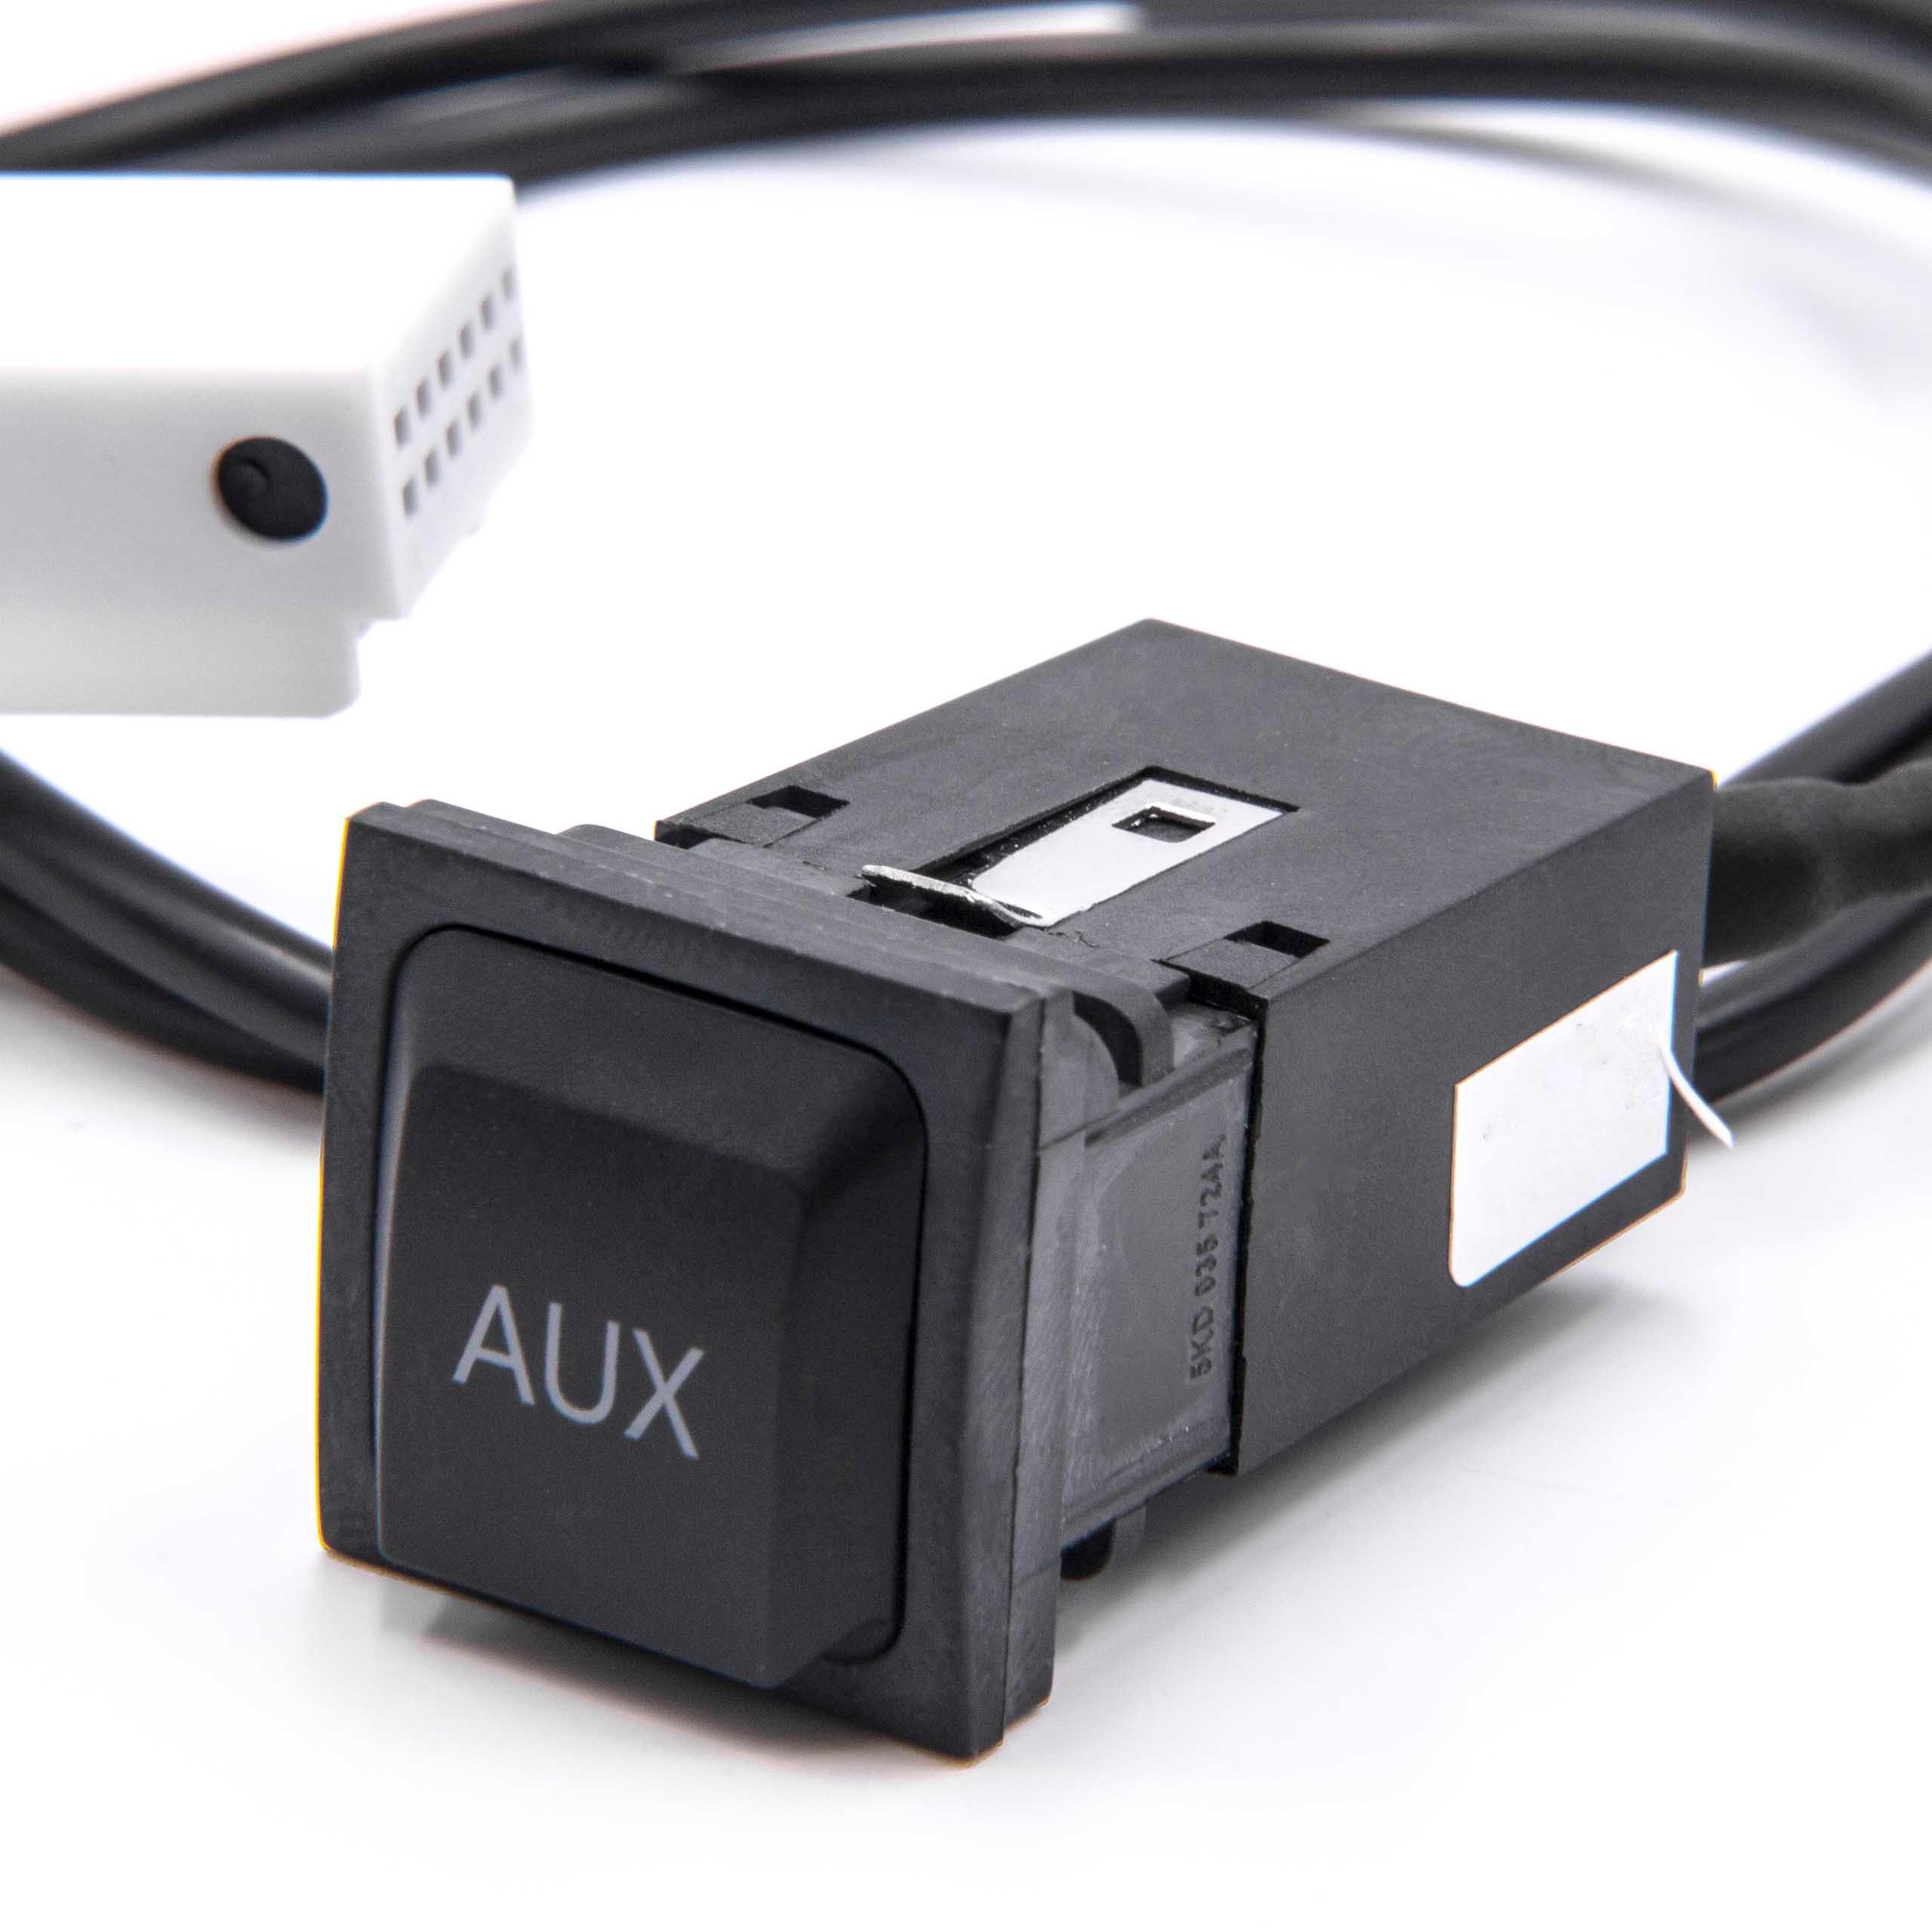 AUX Audio Adapter Kabel für VW, Audi / Seat / Skoda / VW RNS310 Auto Radio u.a. - 120 cm